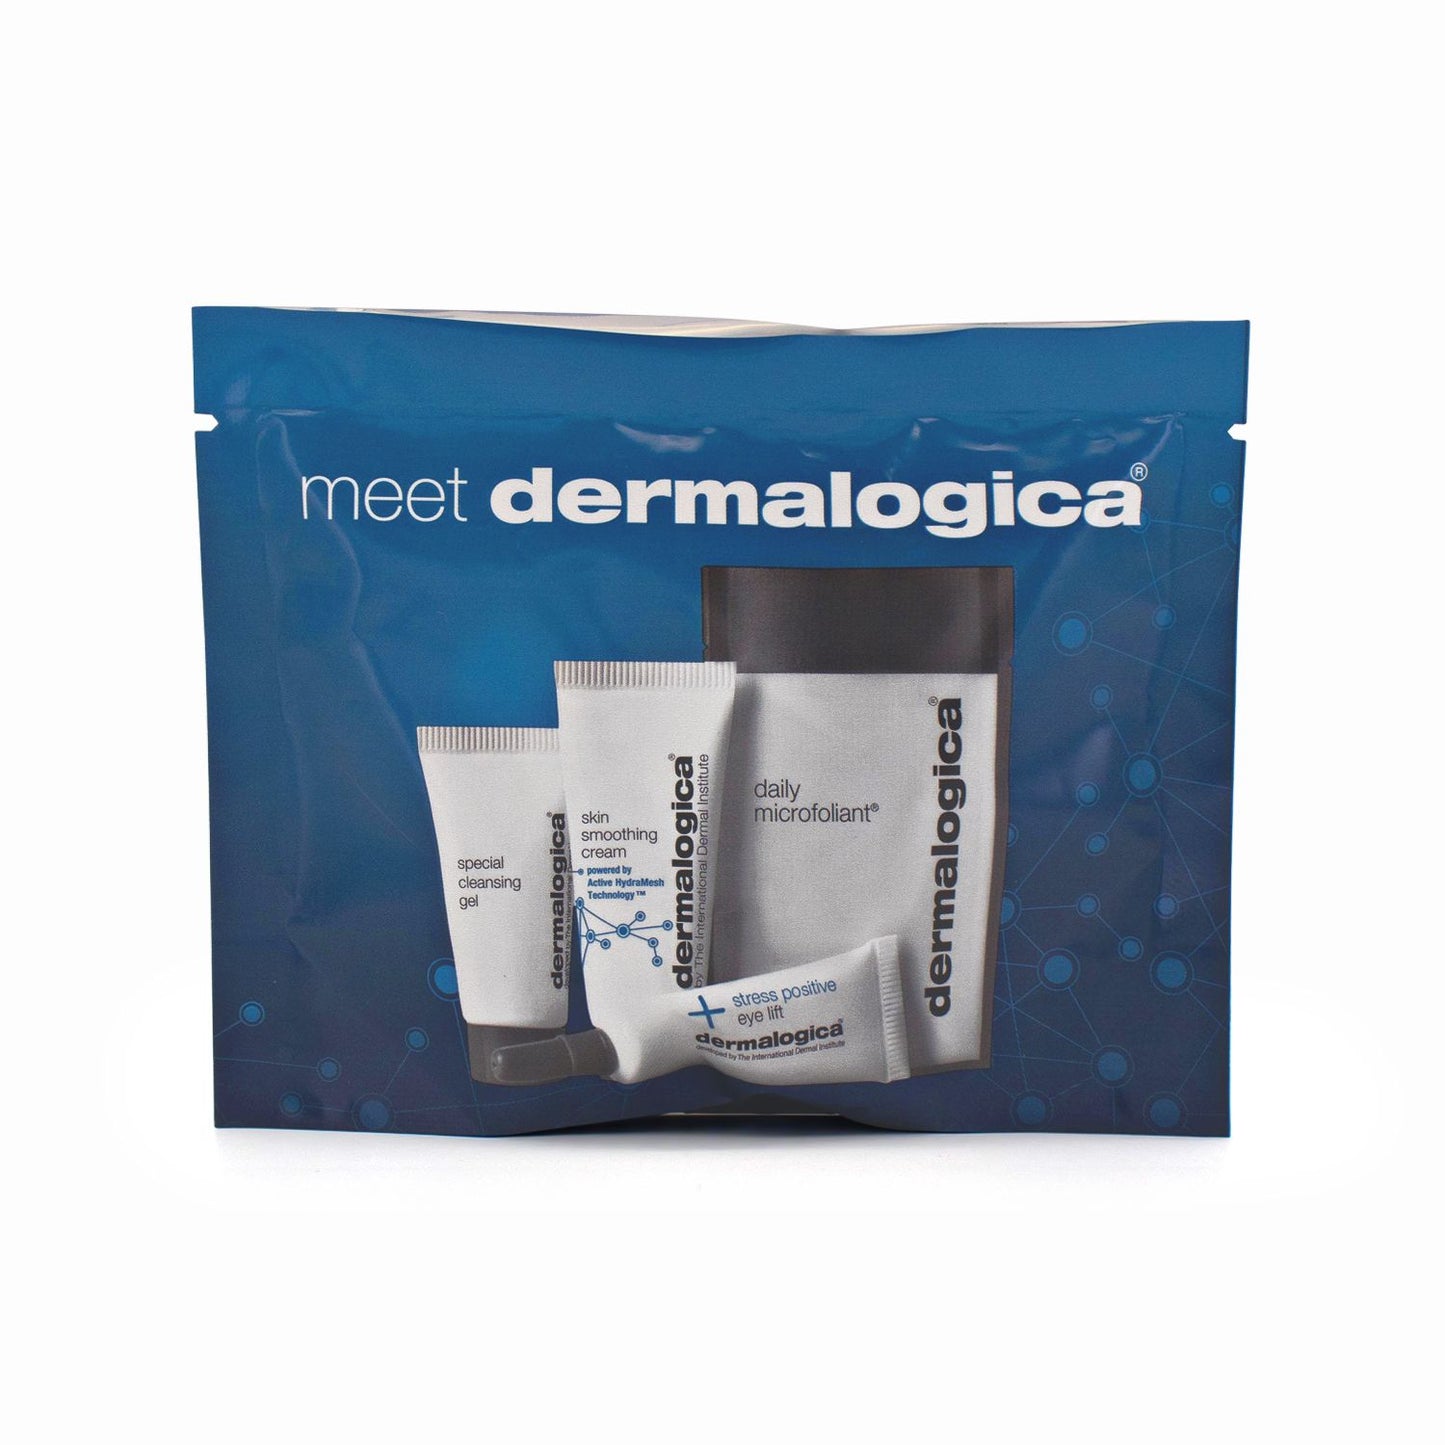 Dermalogica Meet Dermalogica Amenity Pack 4 Pc Skincare Set - Missing Box